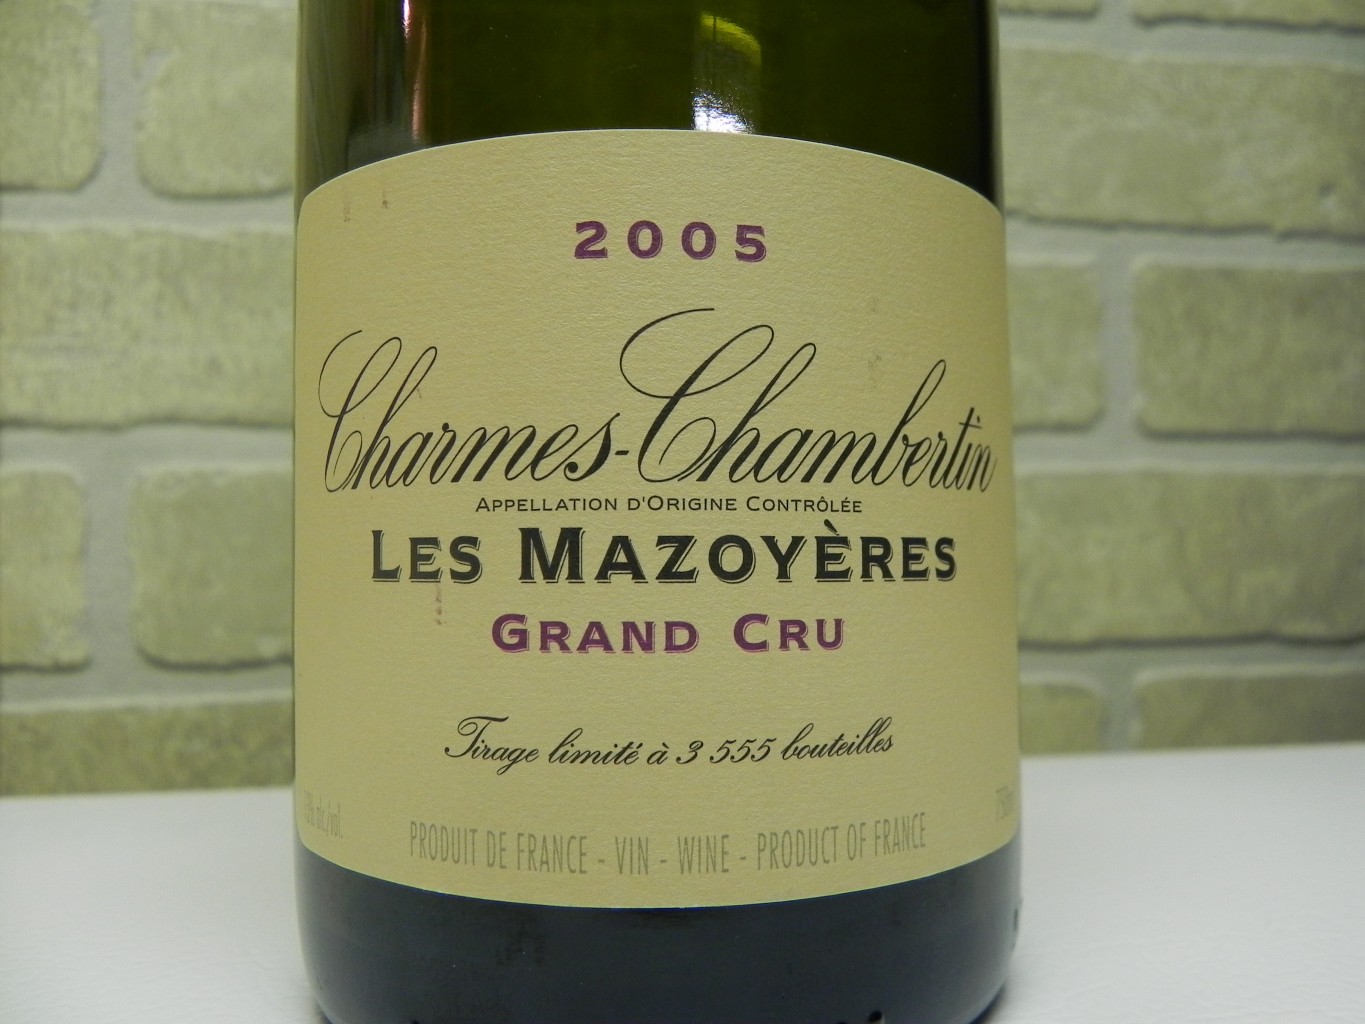 Domaine de la Vougeraie Charmes-Chambertin Les Mazoyeres Grand Cru